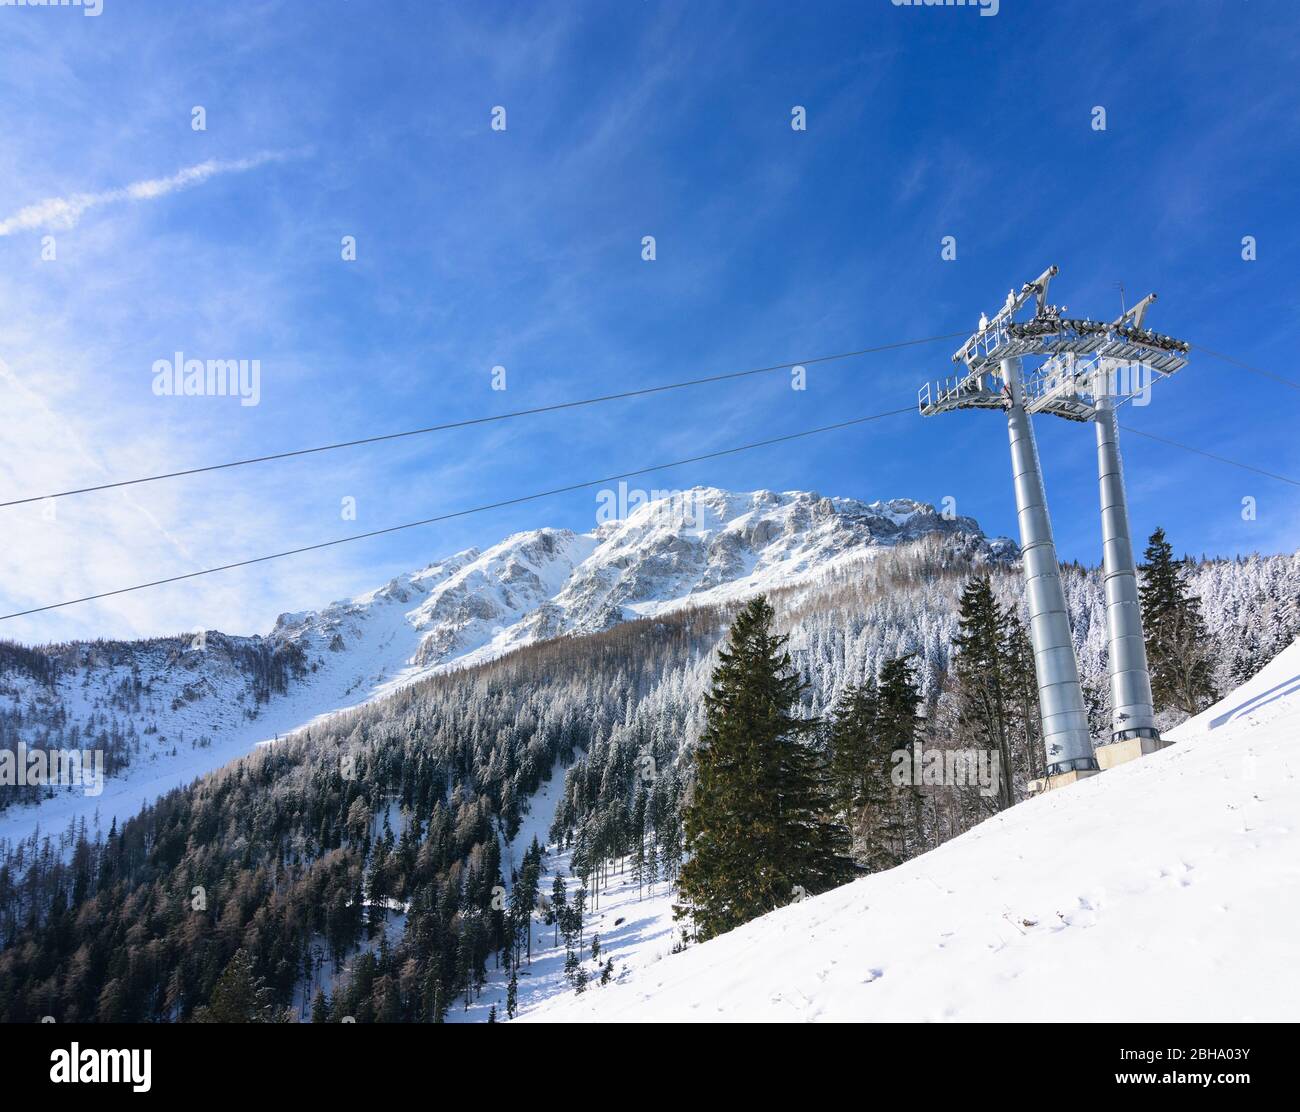 Puchberg am Schneeberg: mountain Schneeberg, cable car, ski lift in Vienna Alps, Alps, Lower Austria, Lower Austria, Austria Stock Photo